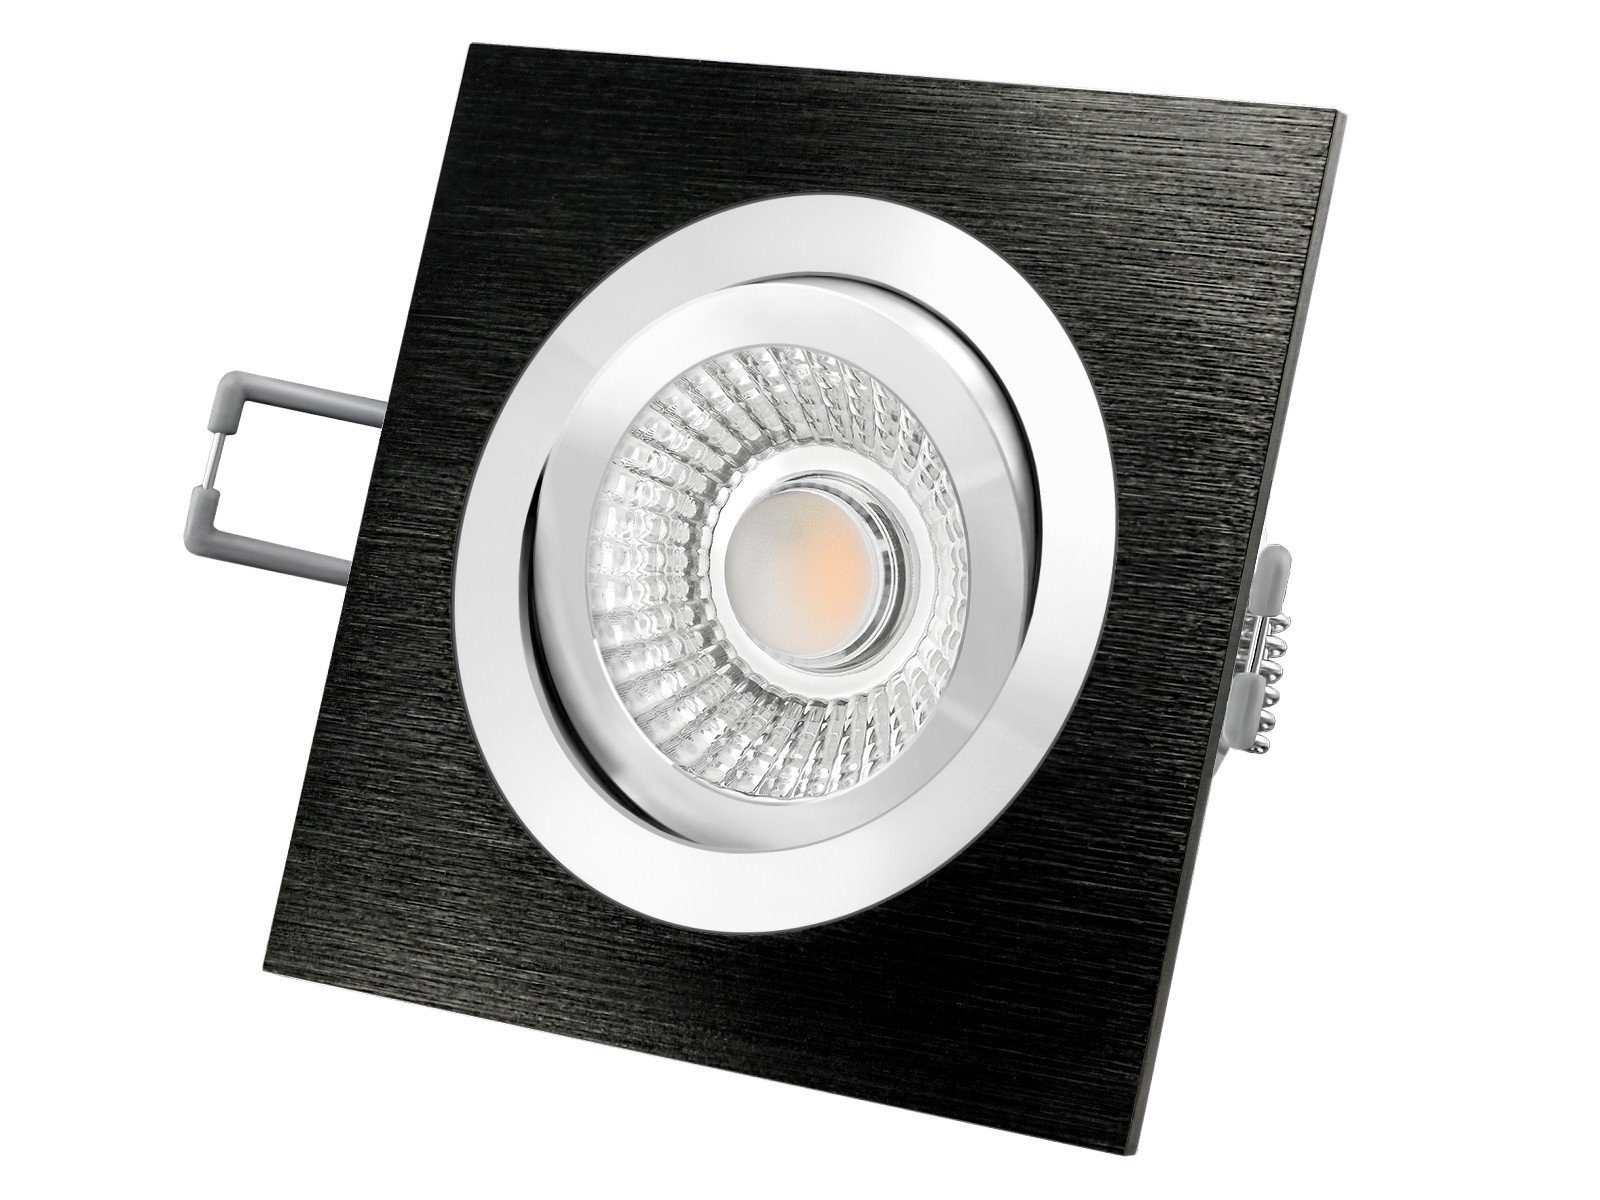 SSC-LUXon LED Einbaustrahler QF-2 LED-Einbauspot flach Alu schwarz schwenkbar mit LED-Modul 230V, Warmweiß